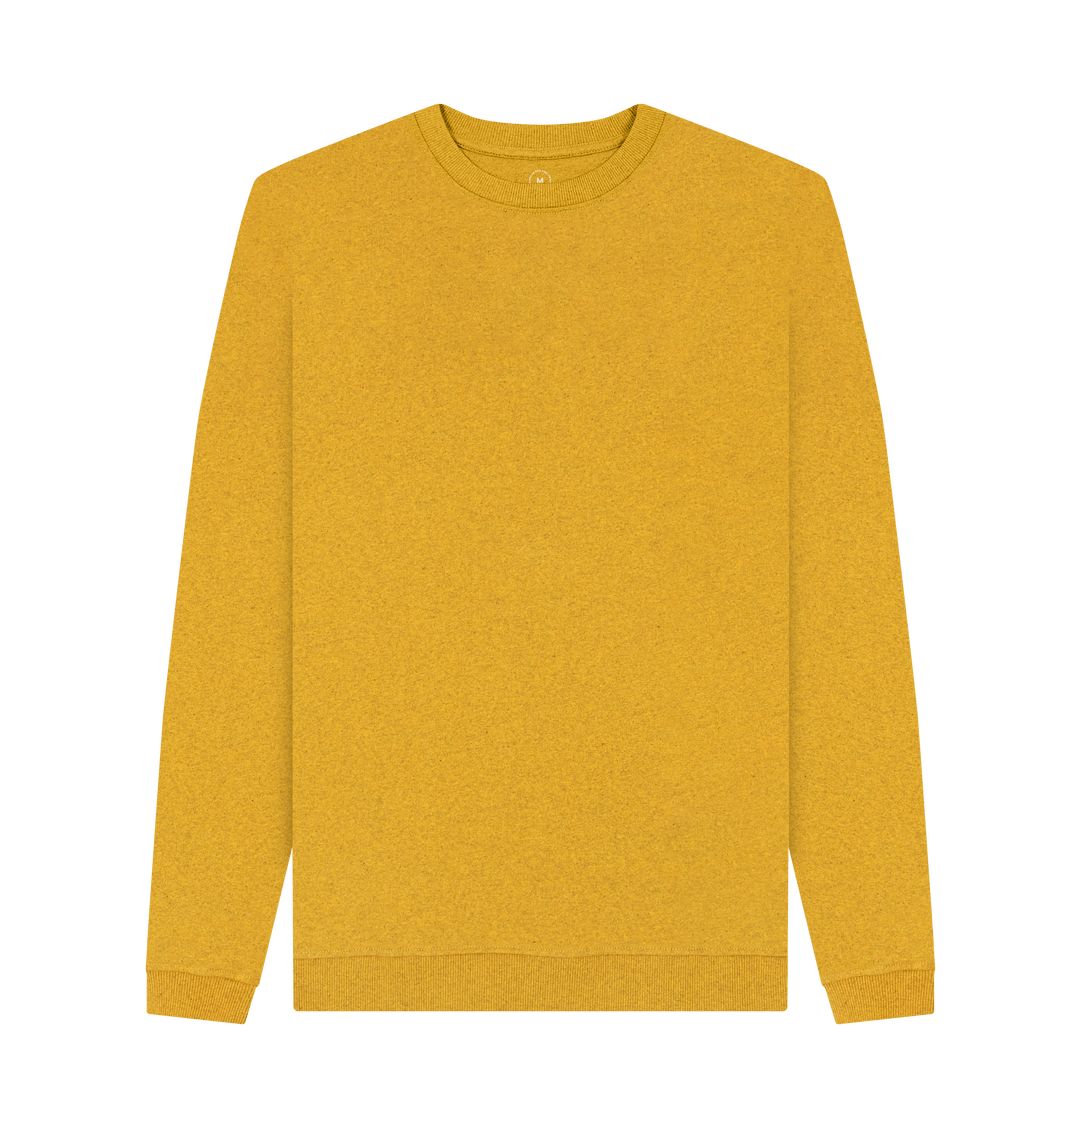 Sunflower Yellow Men's sustainable essential sweatshirt